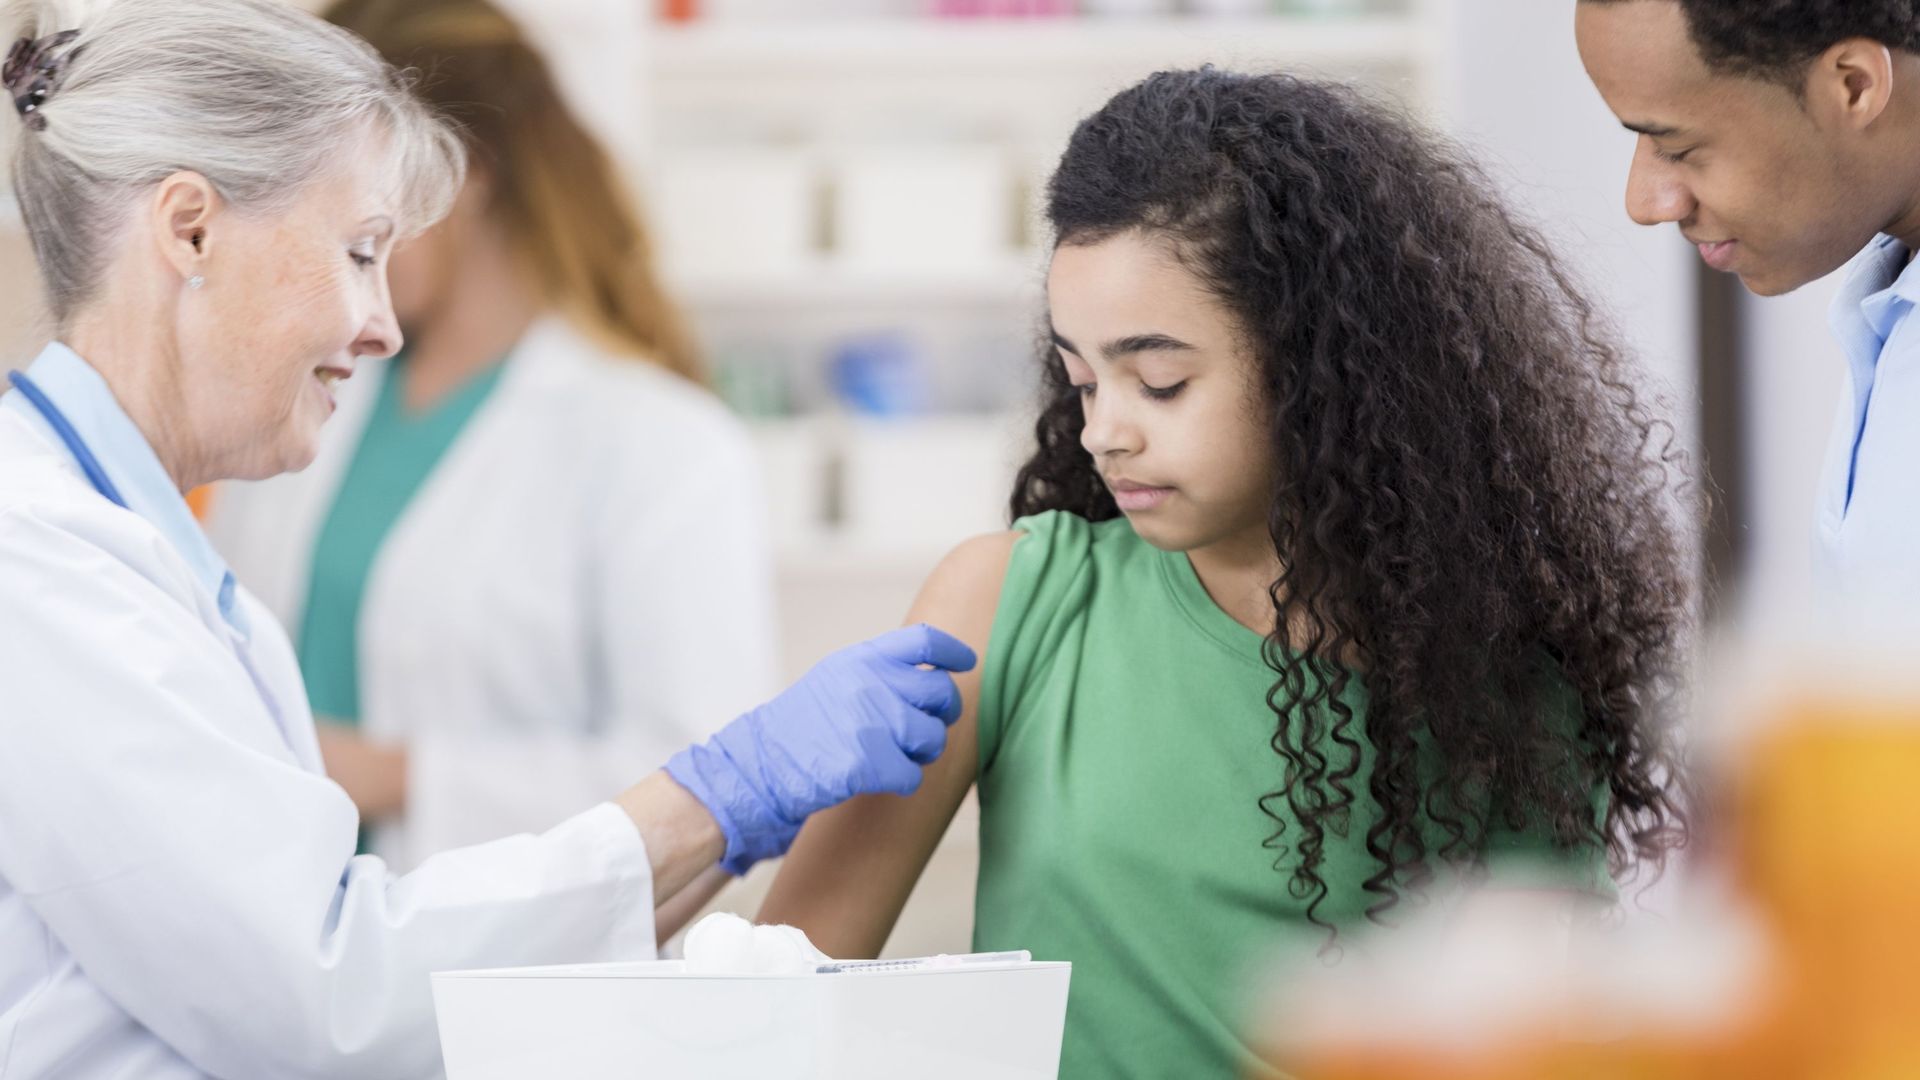 Coronavirus : le Danemark examine une complication inflammatoire comme éventuel effet du vaccin